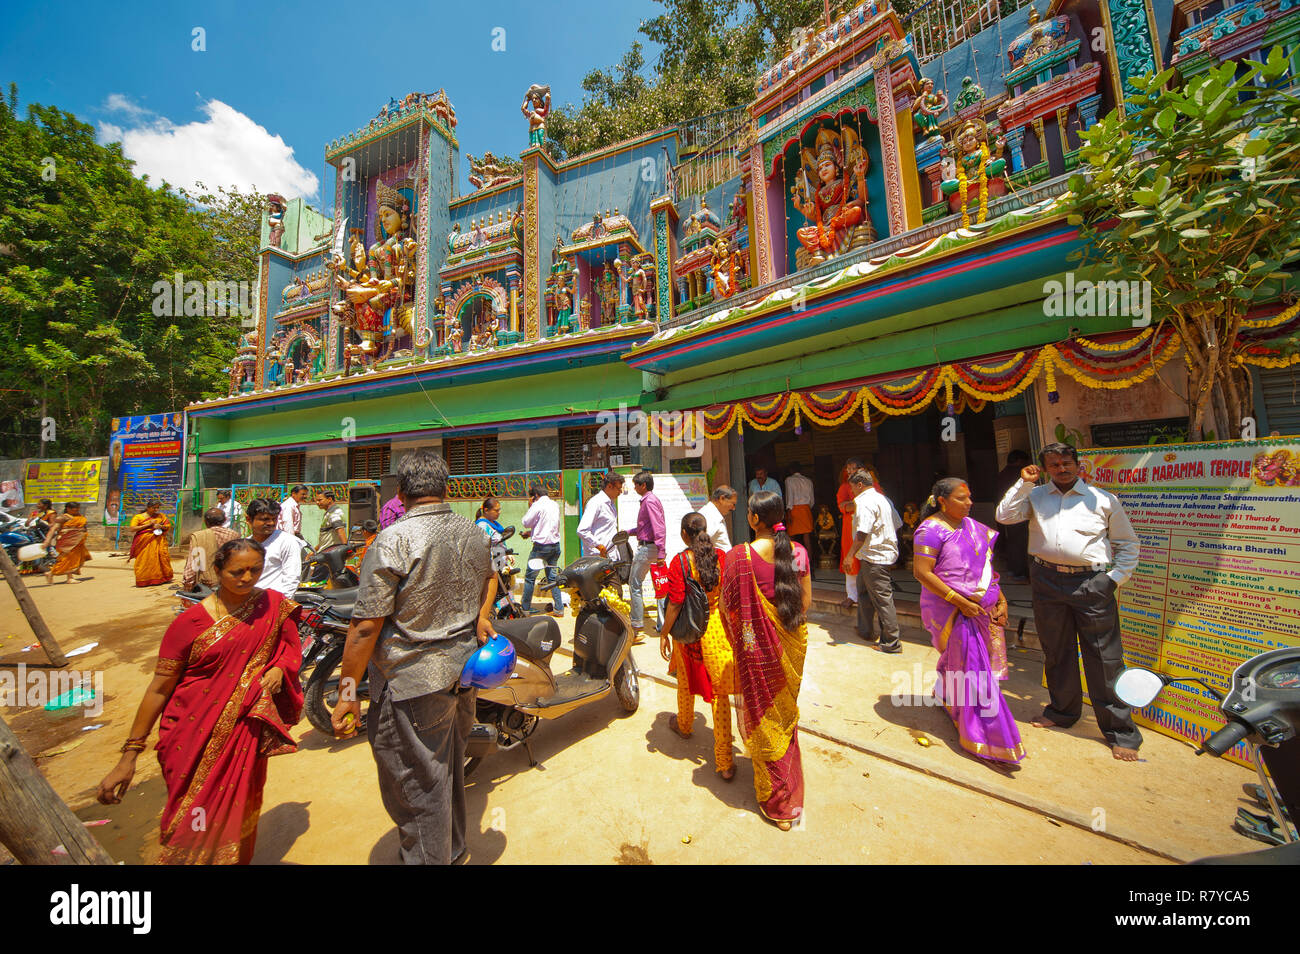 Indian people at Shri Circle Maramma Temple, Bangalore, India Stock Photo